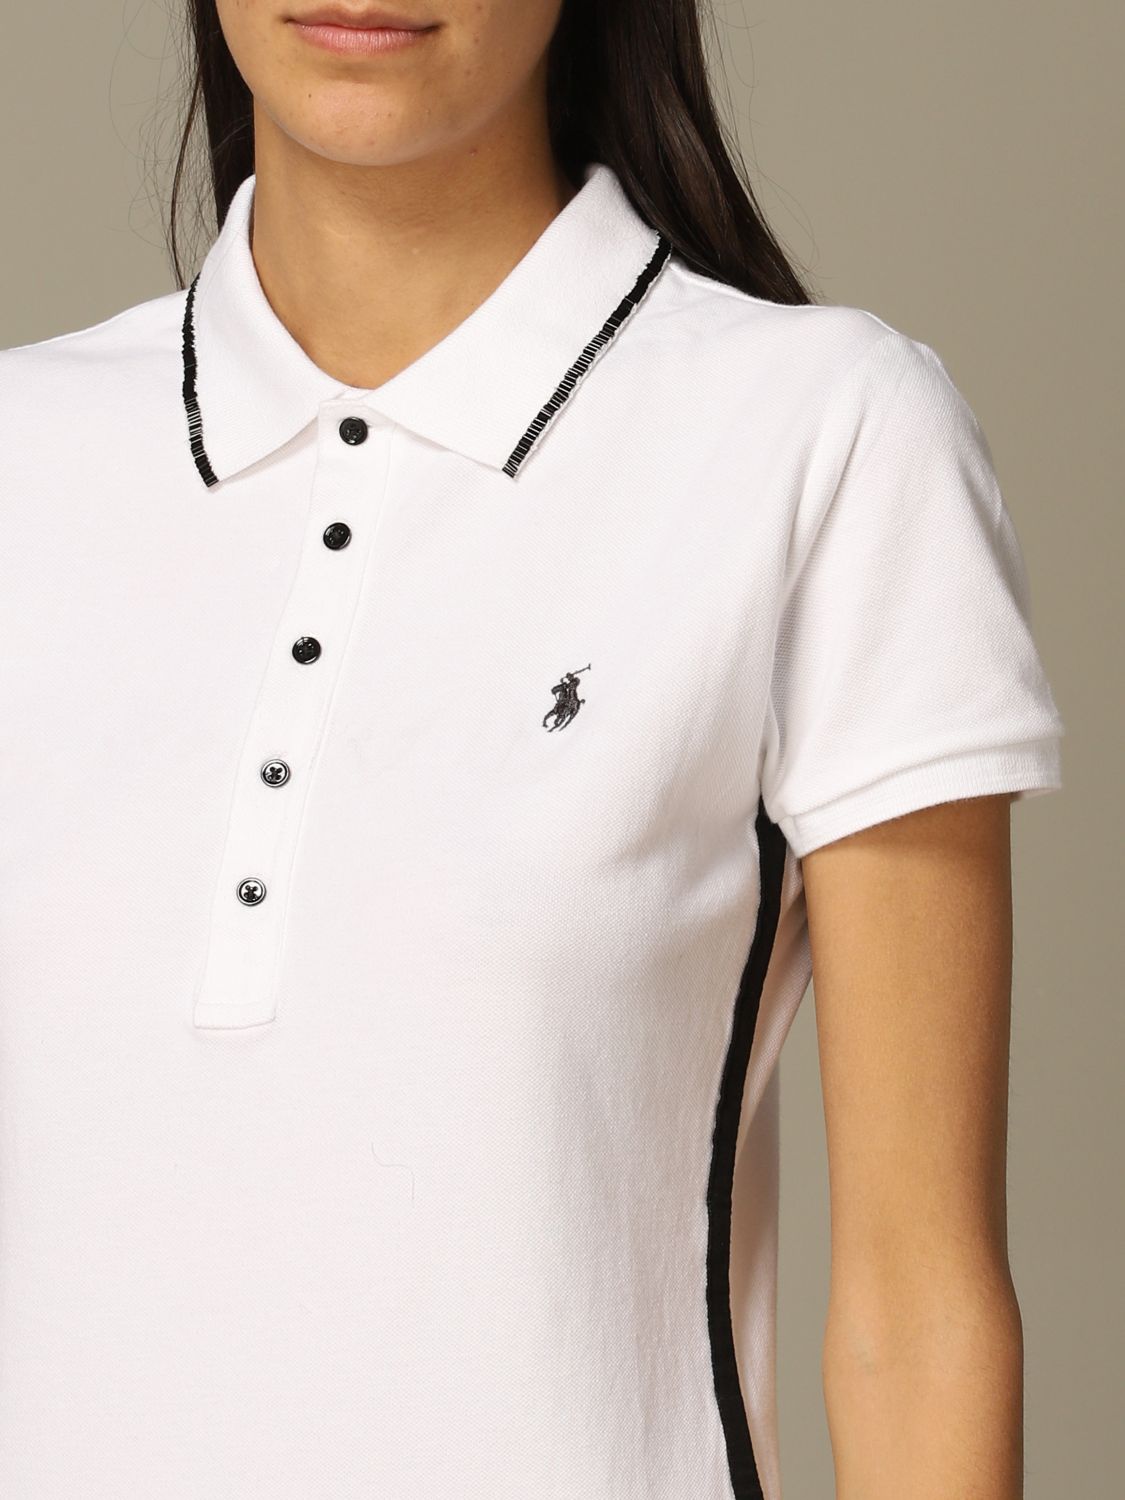 natuurlijk Moeras Afleiden Polo Ralph Lauren Outlet: Damen T-Shirt - Weiß | Polo Ralph Lauren T-Shirt  211792457 online auf GIGLIO.COM